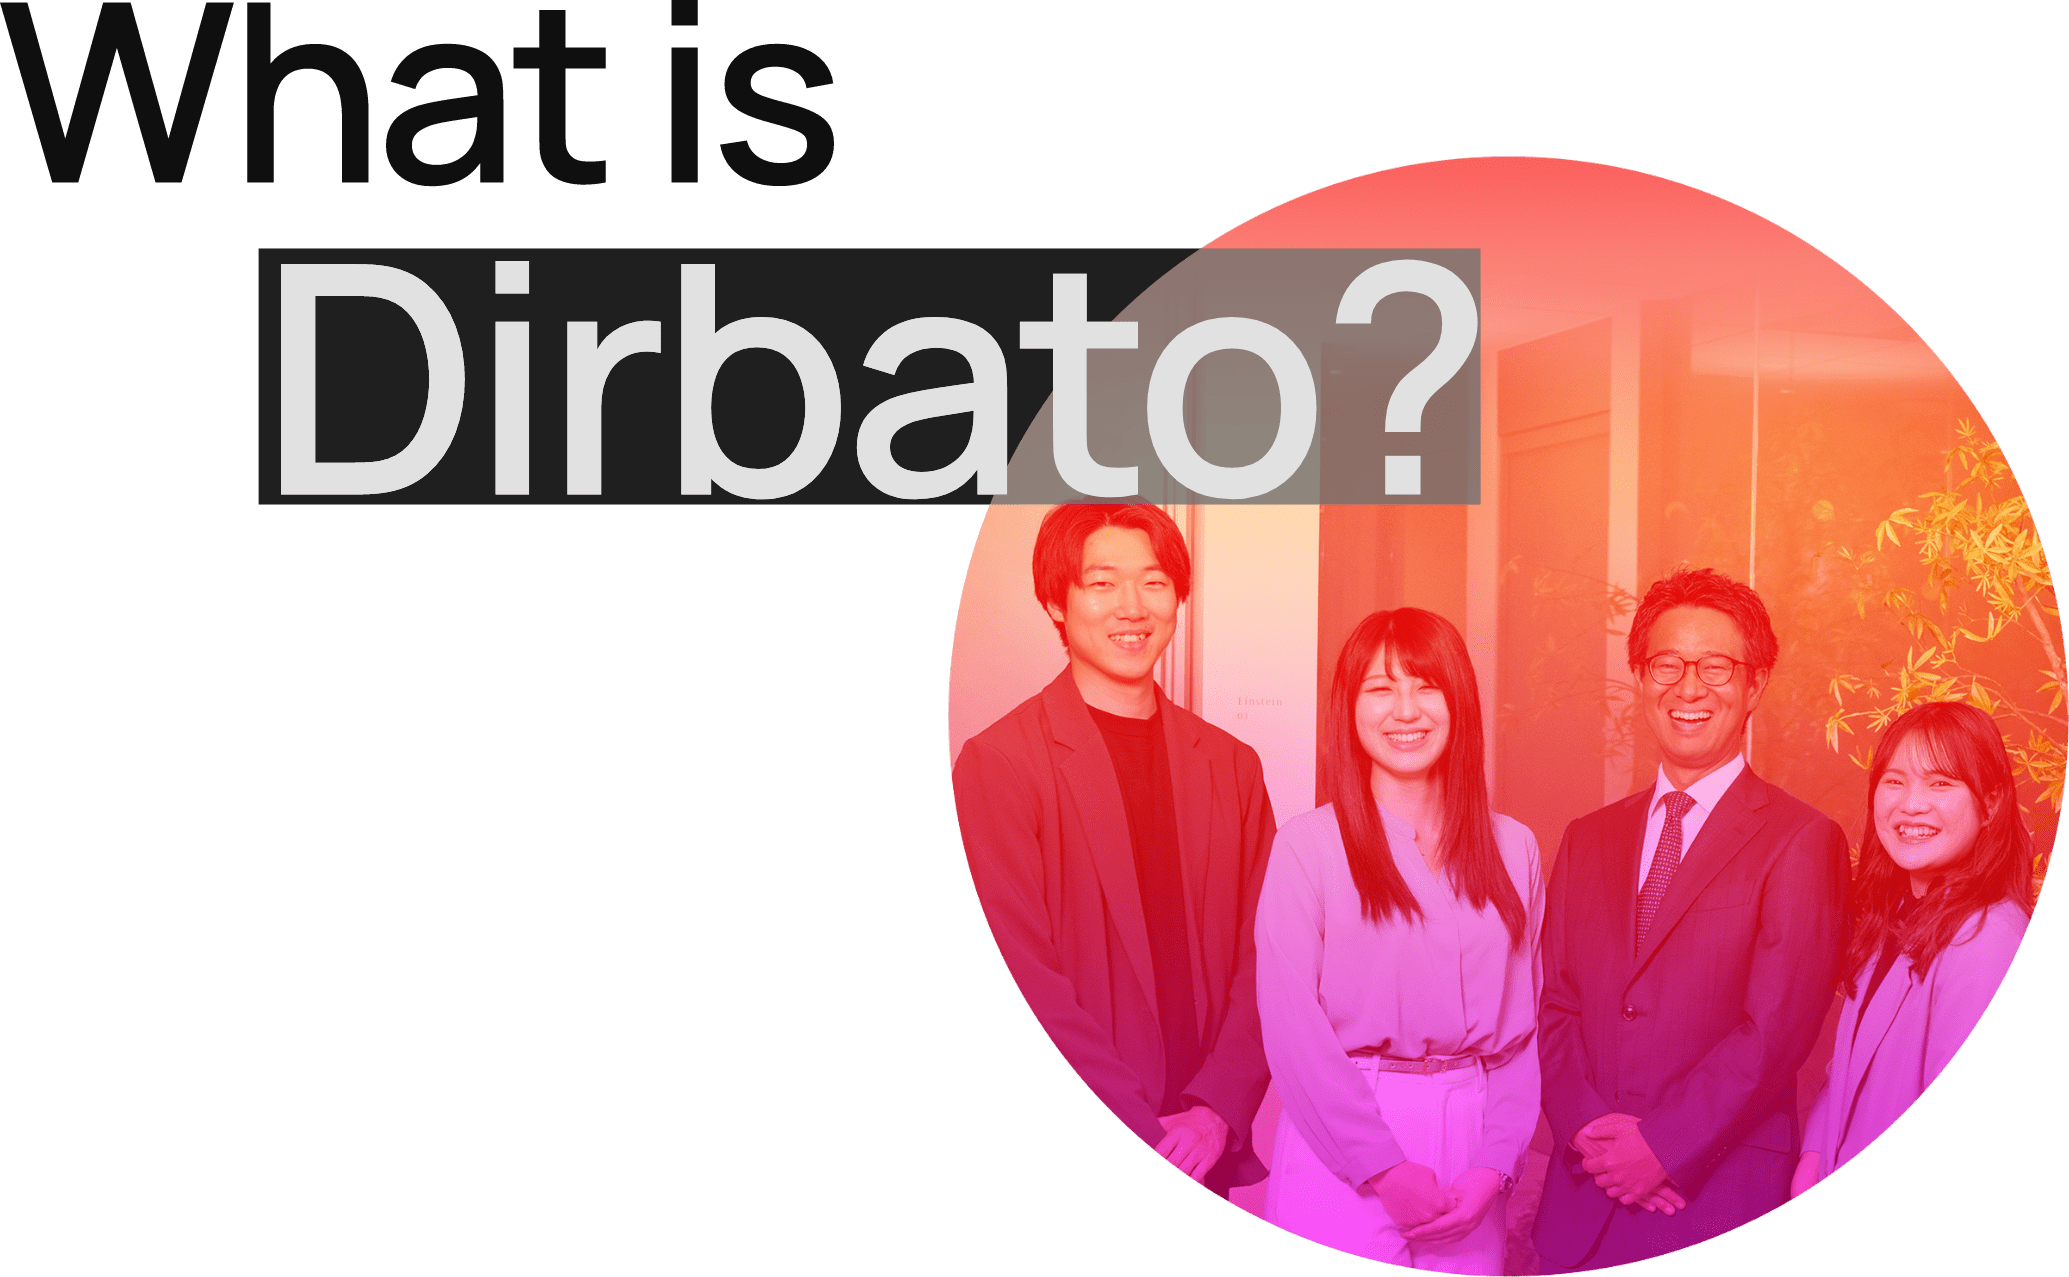 What is Dirbato?